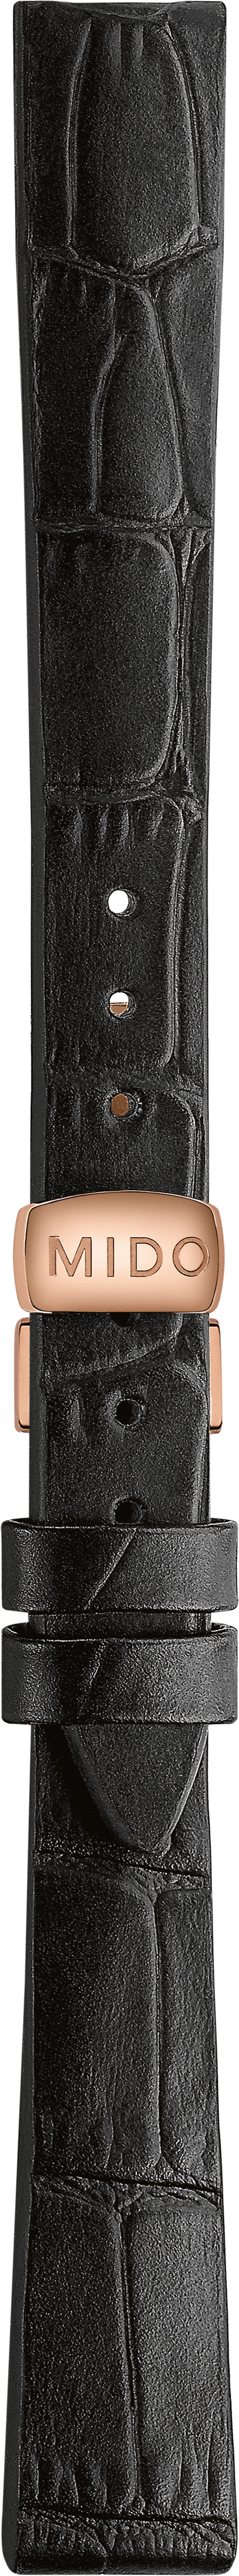 Mido Baroncelli schwarzes Rindsleder-Armband